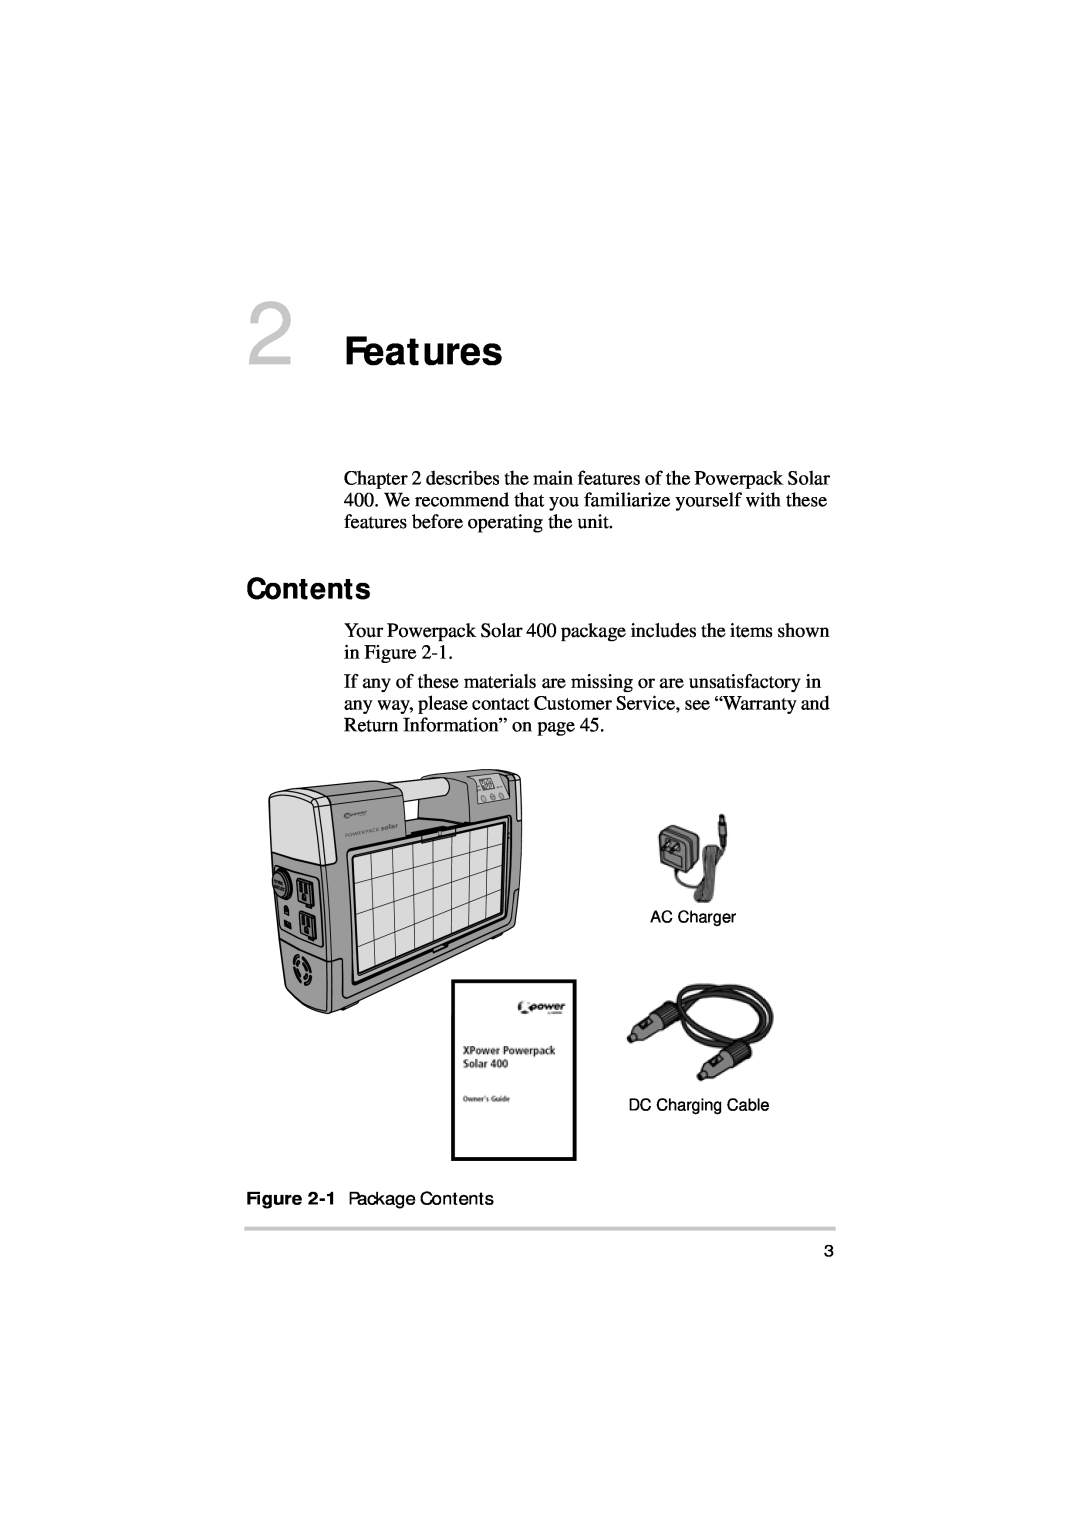 Xantrex Technology Solar 400 manual Features, Contents 